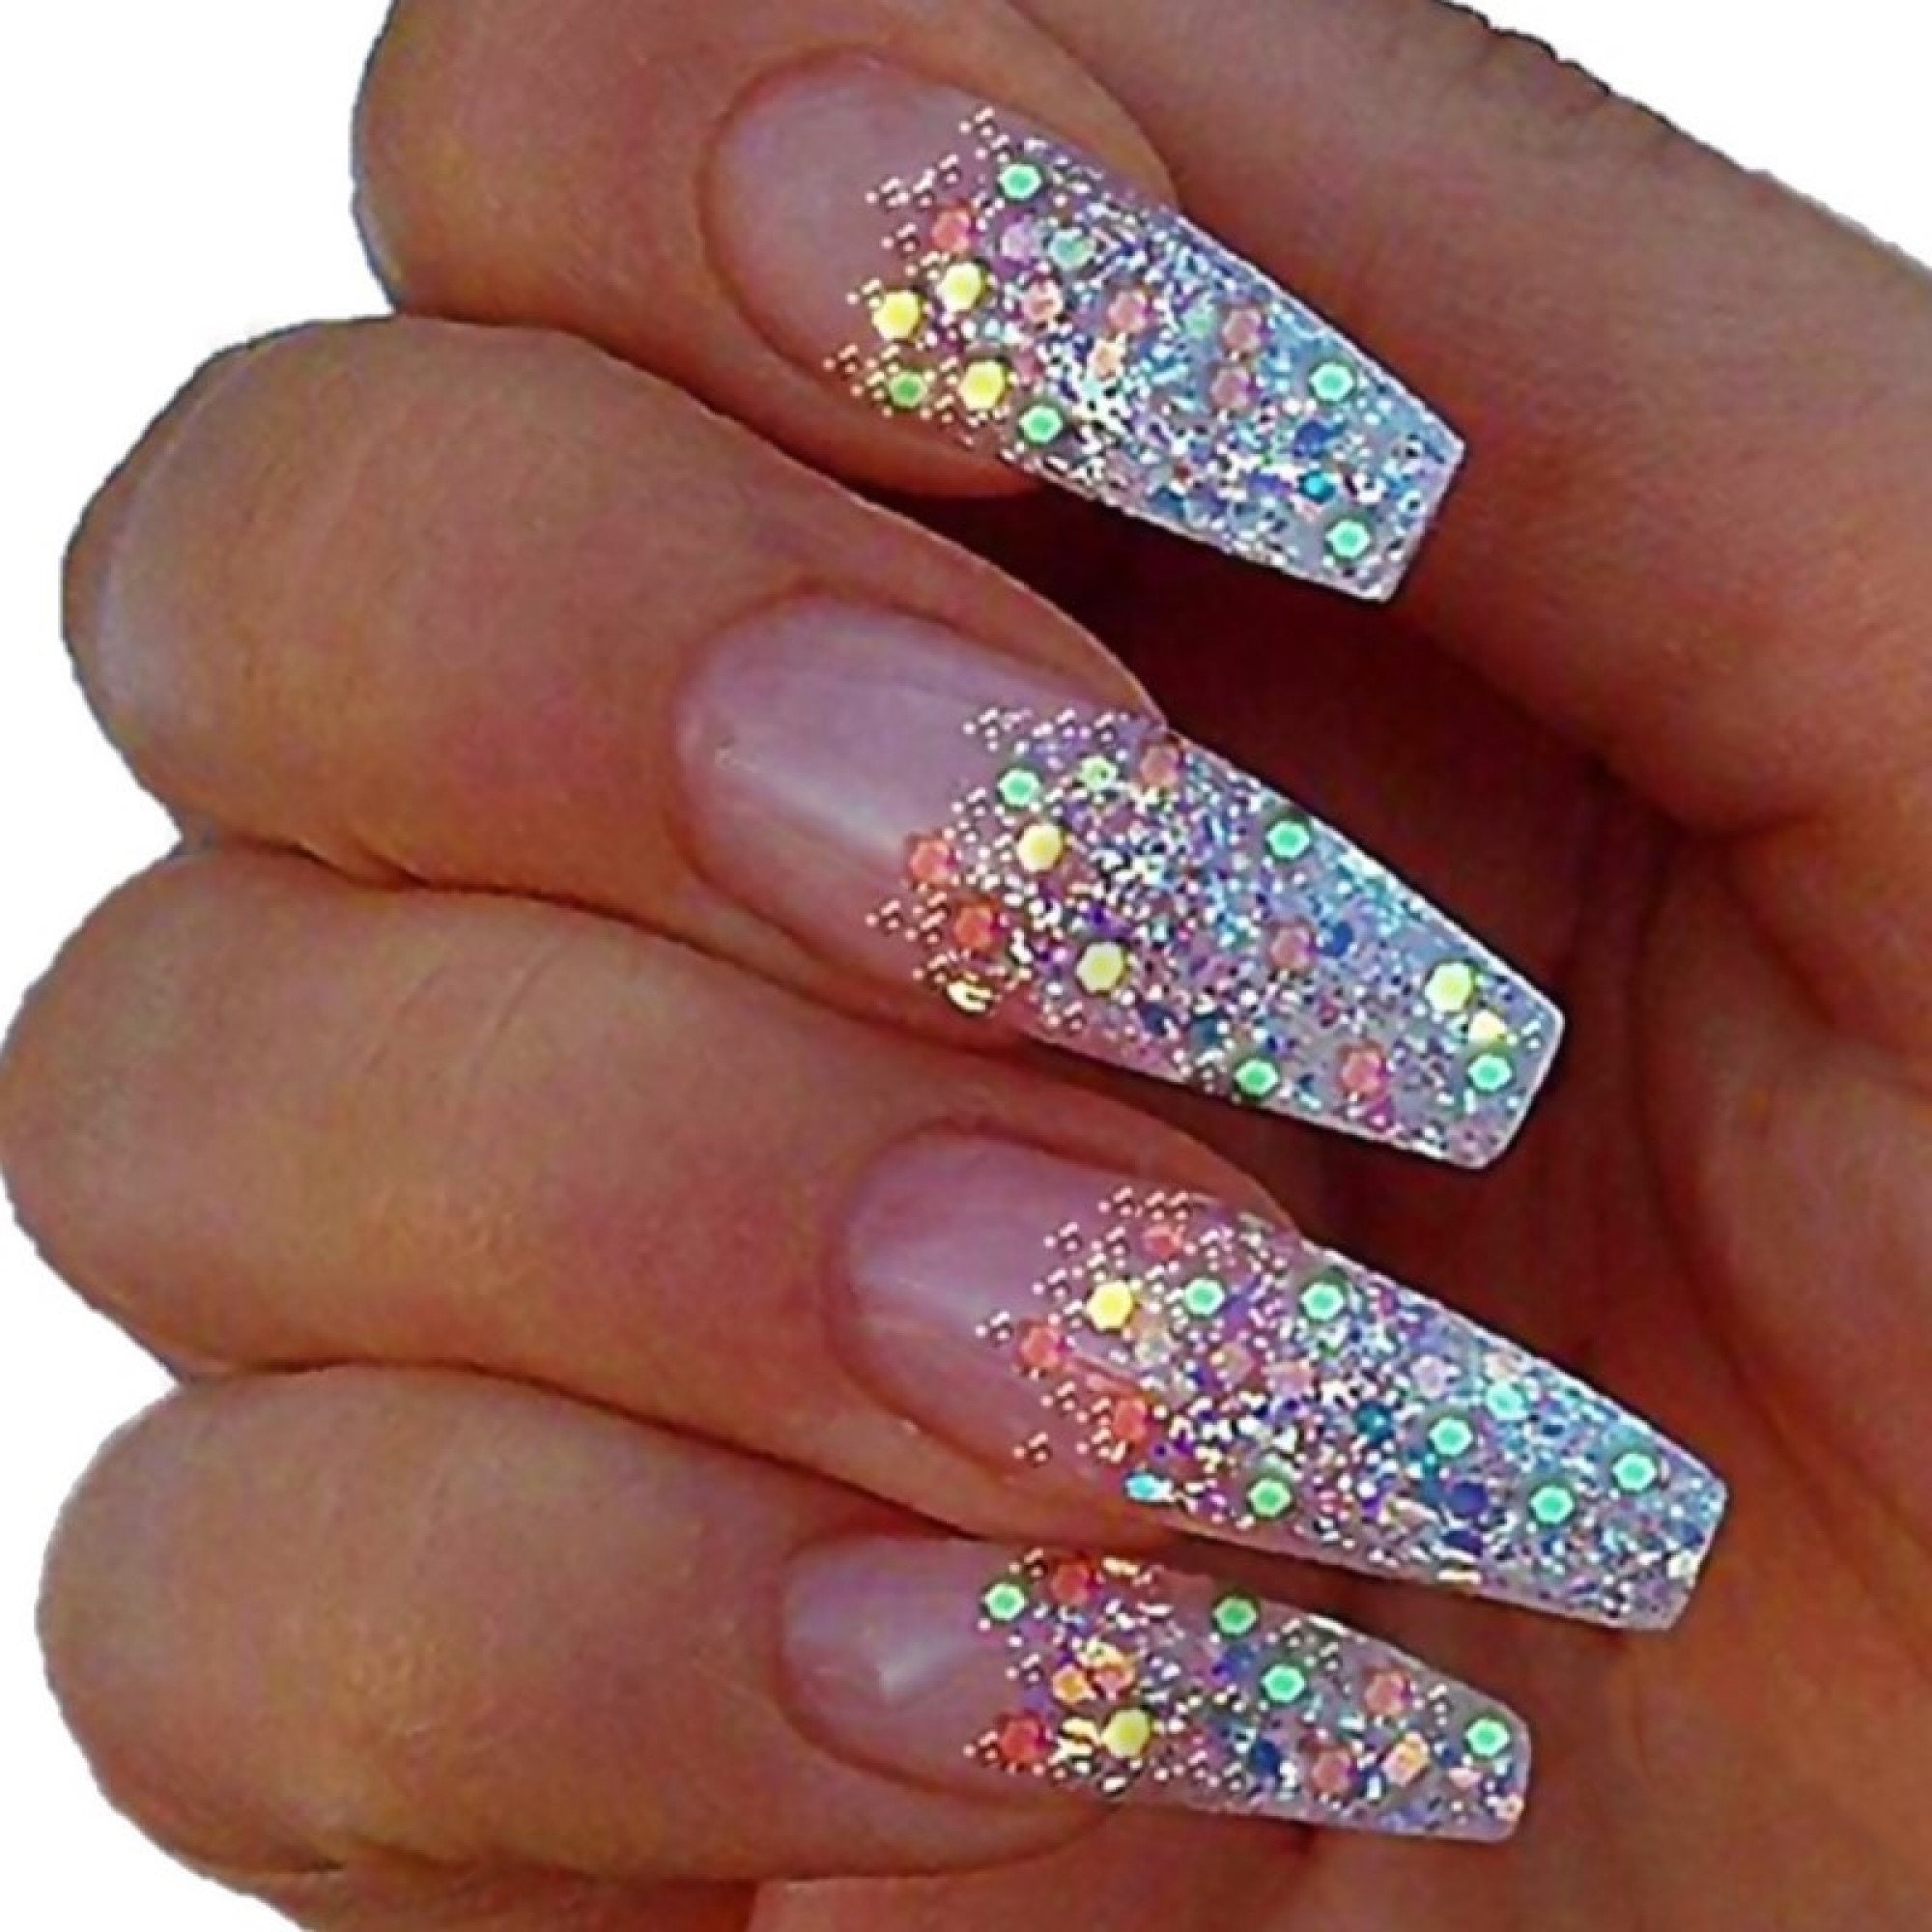 Buy Glitterarty Nails nail / Body / Resin / Craft Glitter Iridescent Mega  Mix Nail Glitter for Nail Art 5g Bag Online in India 